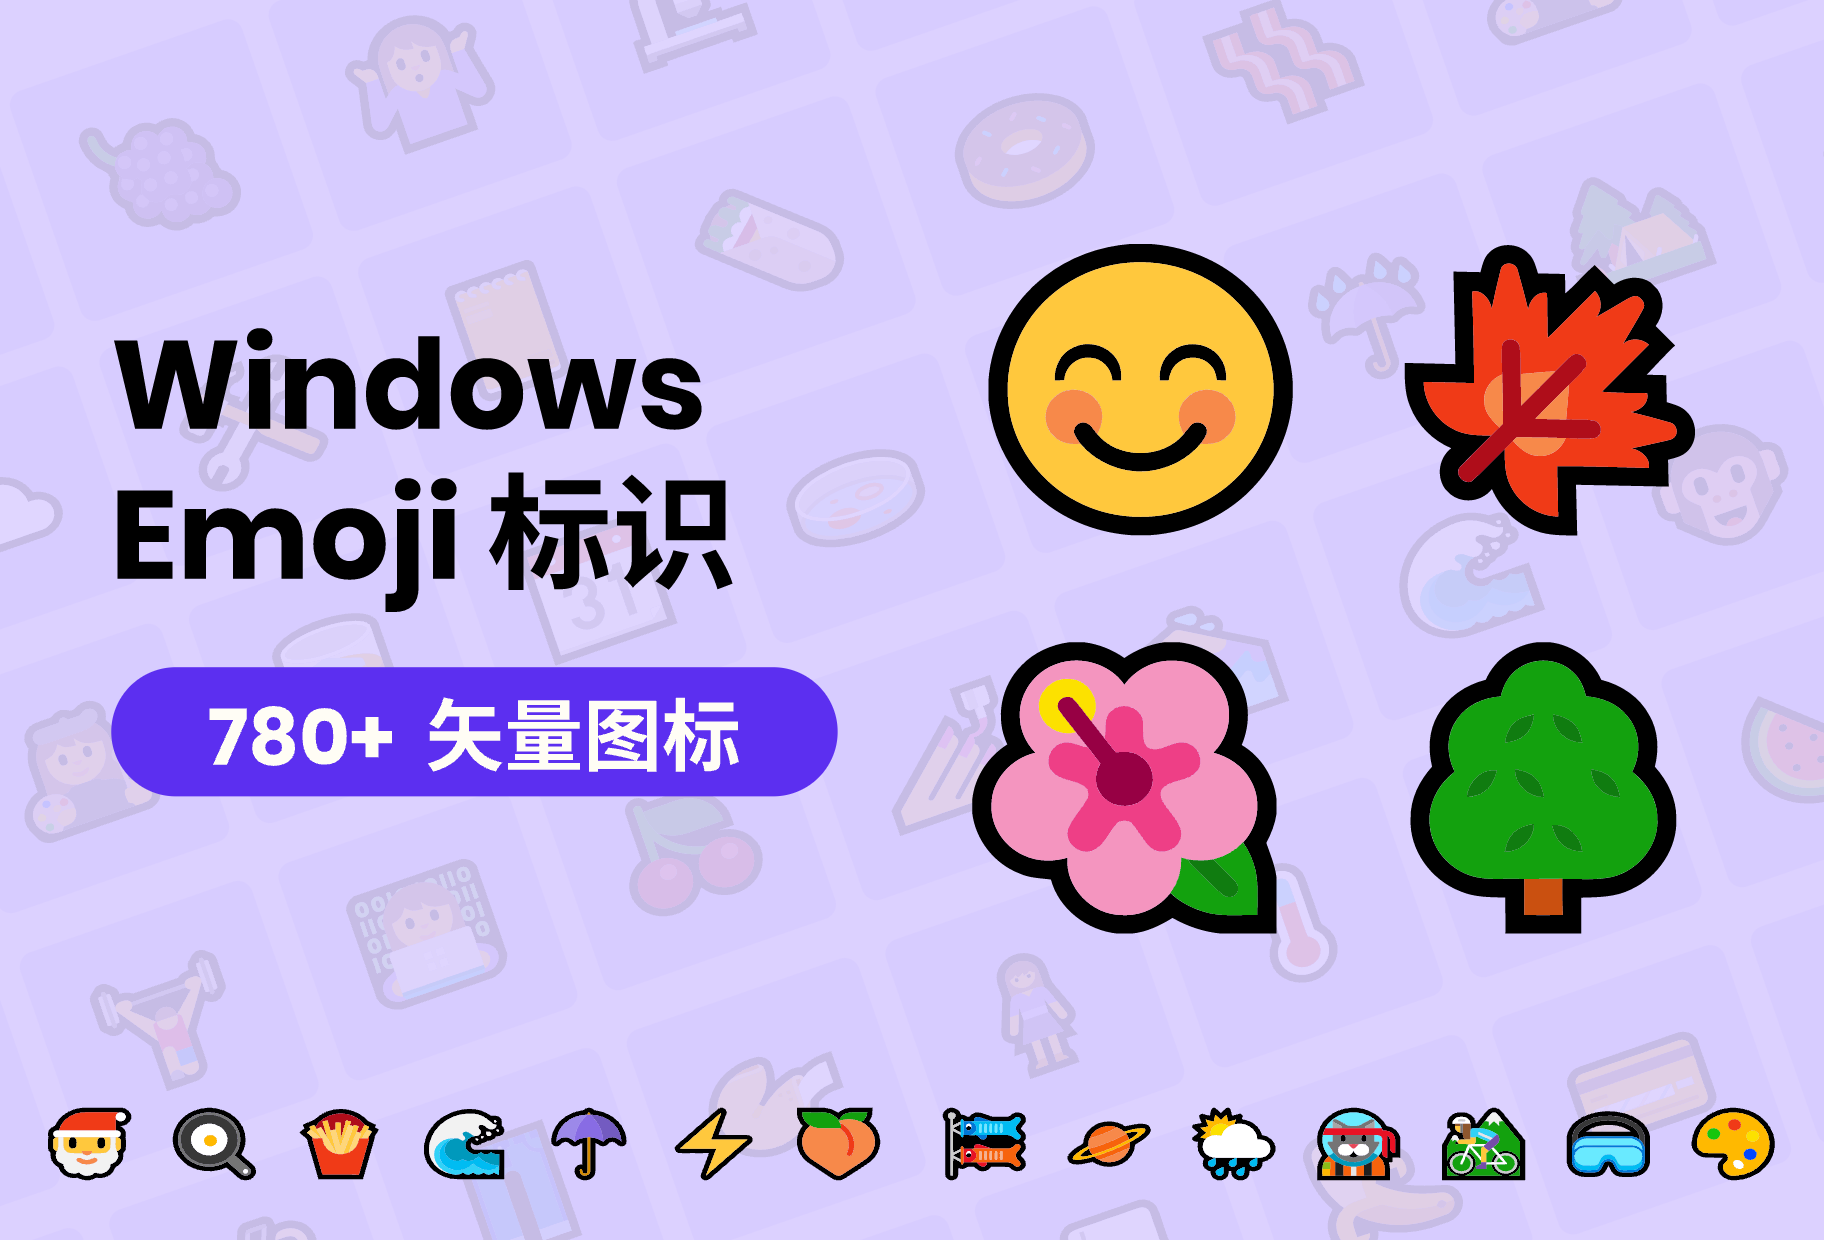 Windows Emoji 矢量图标